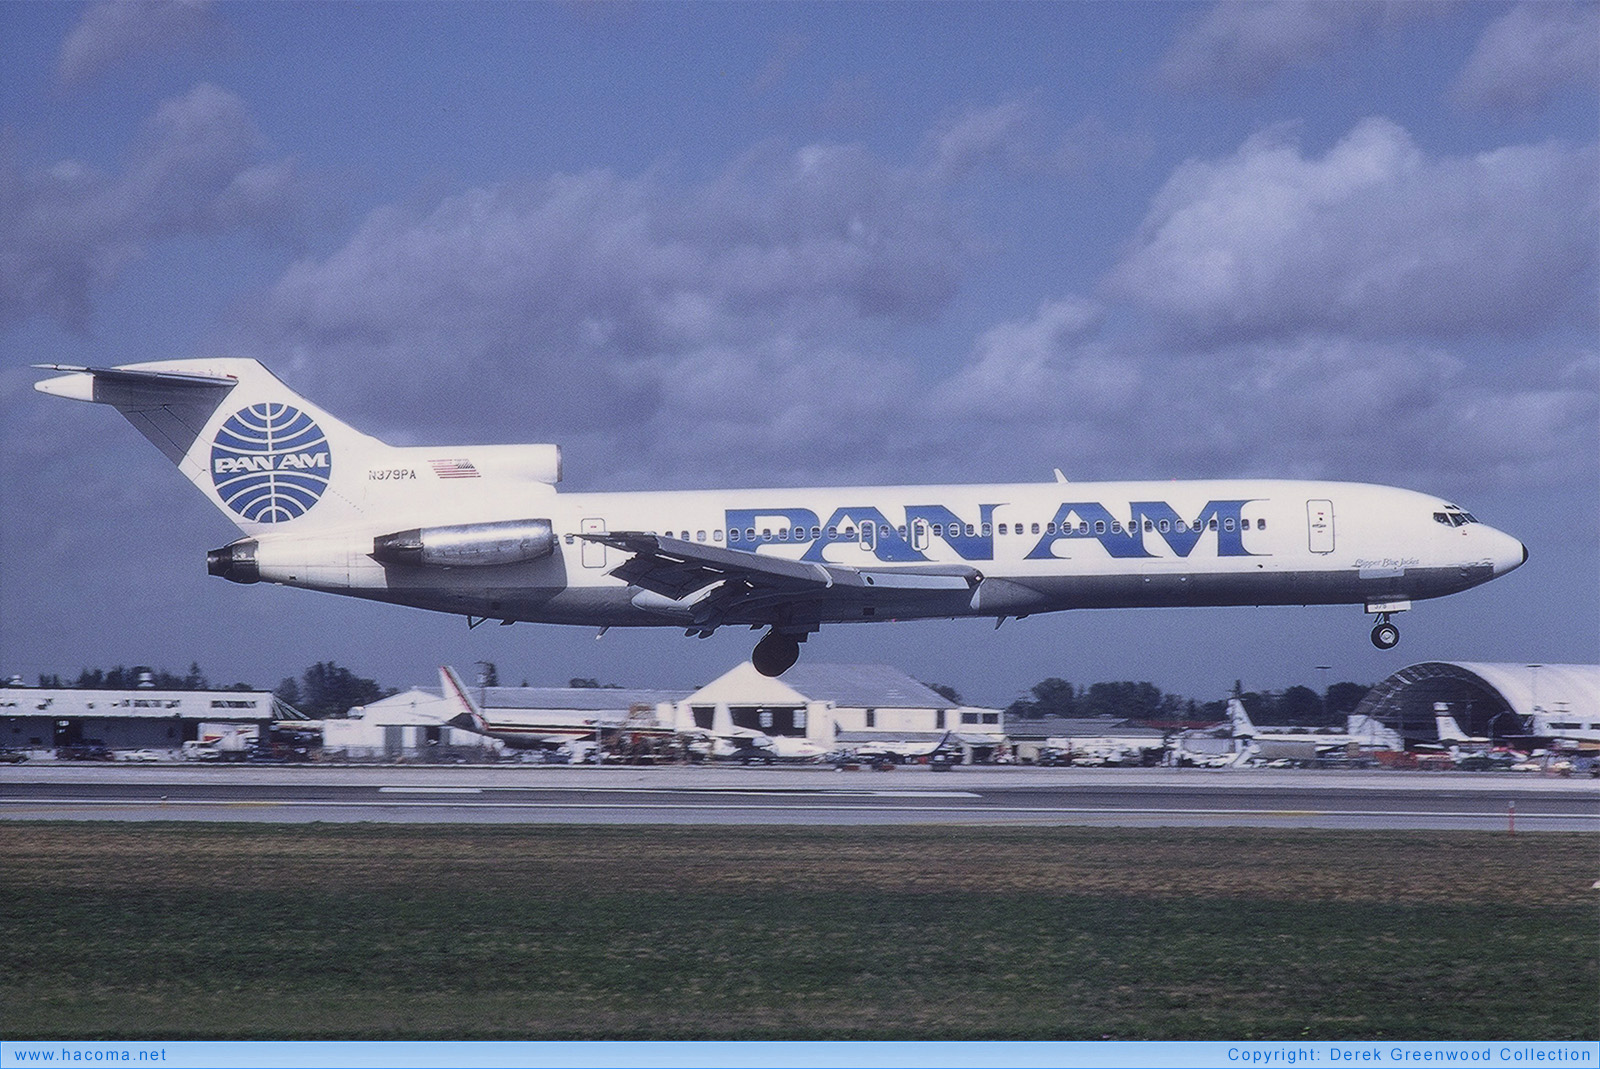 Photo of N379PA - Pan Am Clipper Blue Jacket - Miami International Airport - 1989